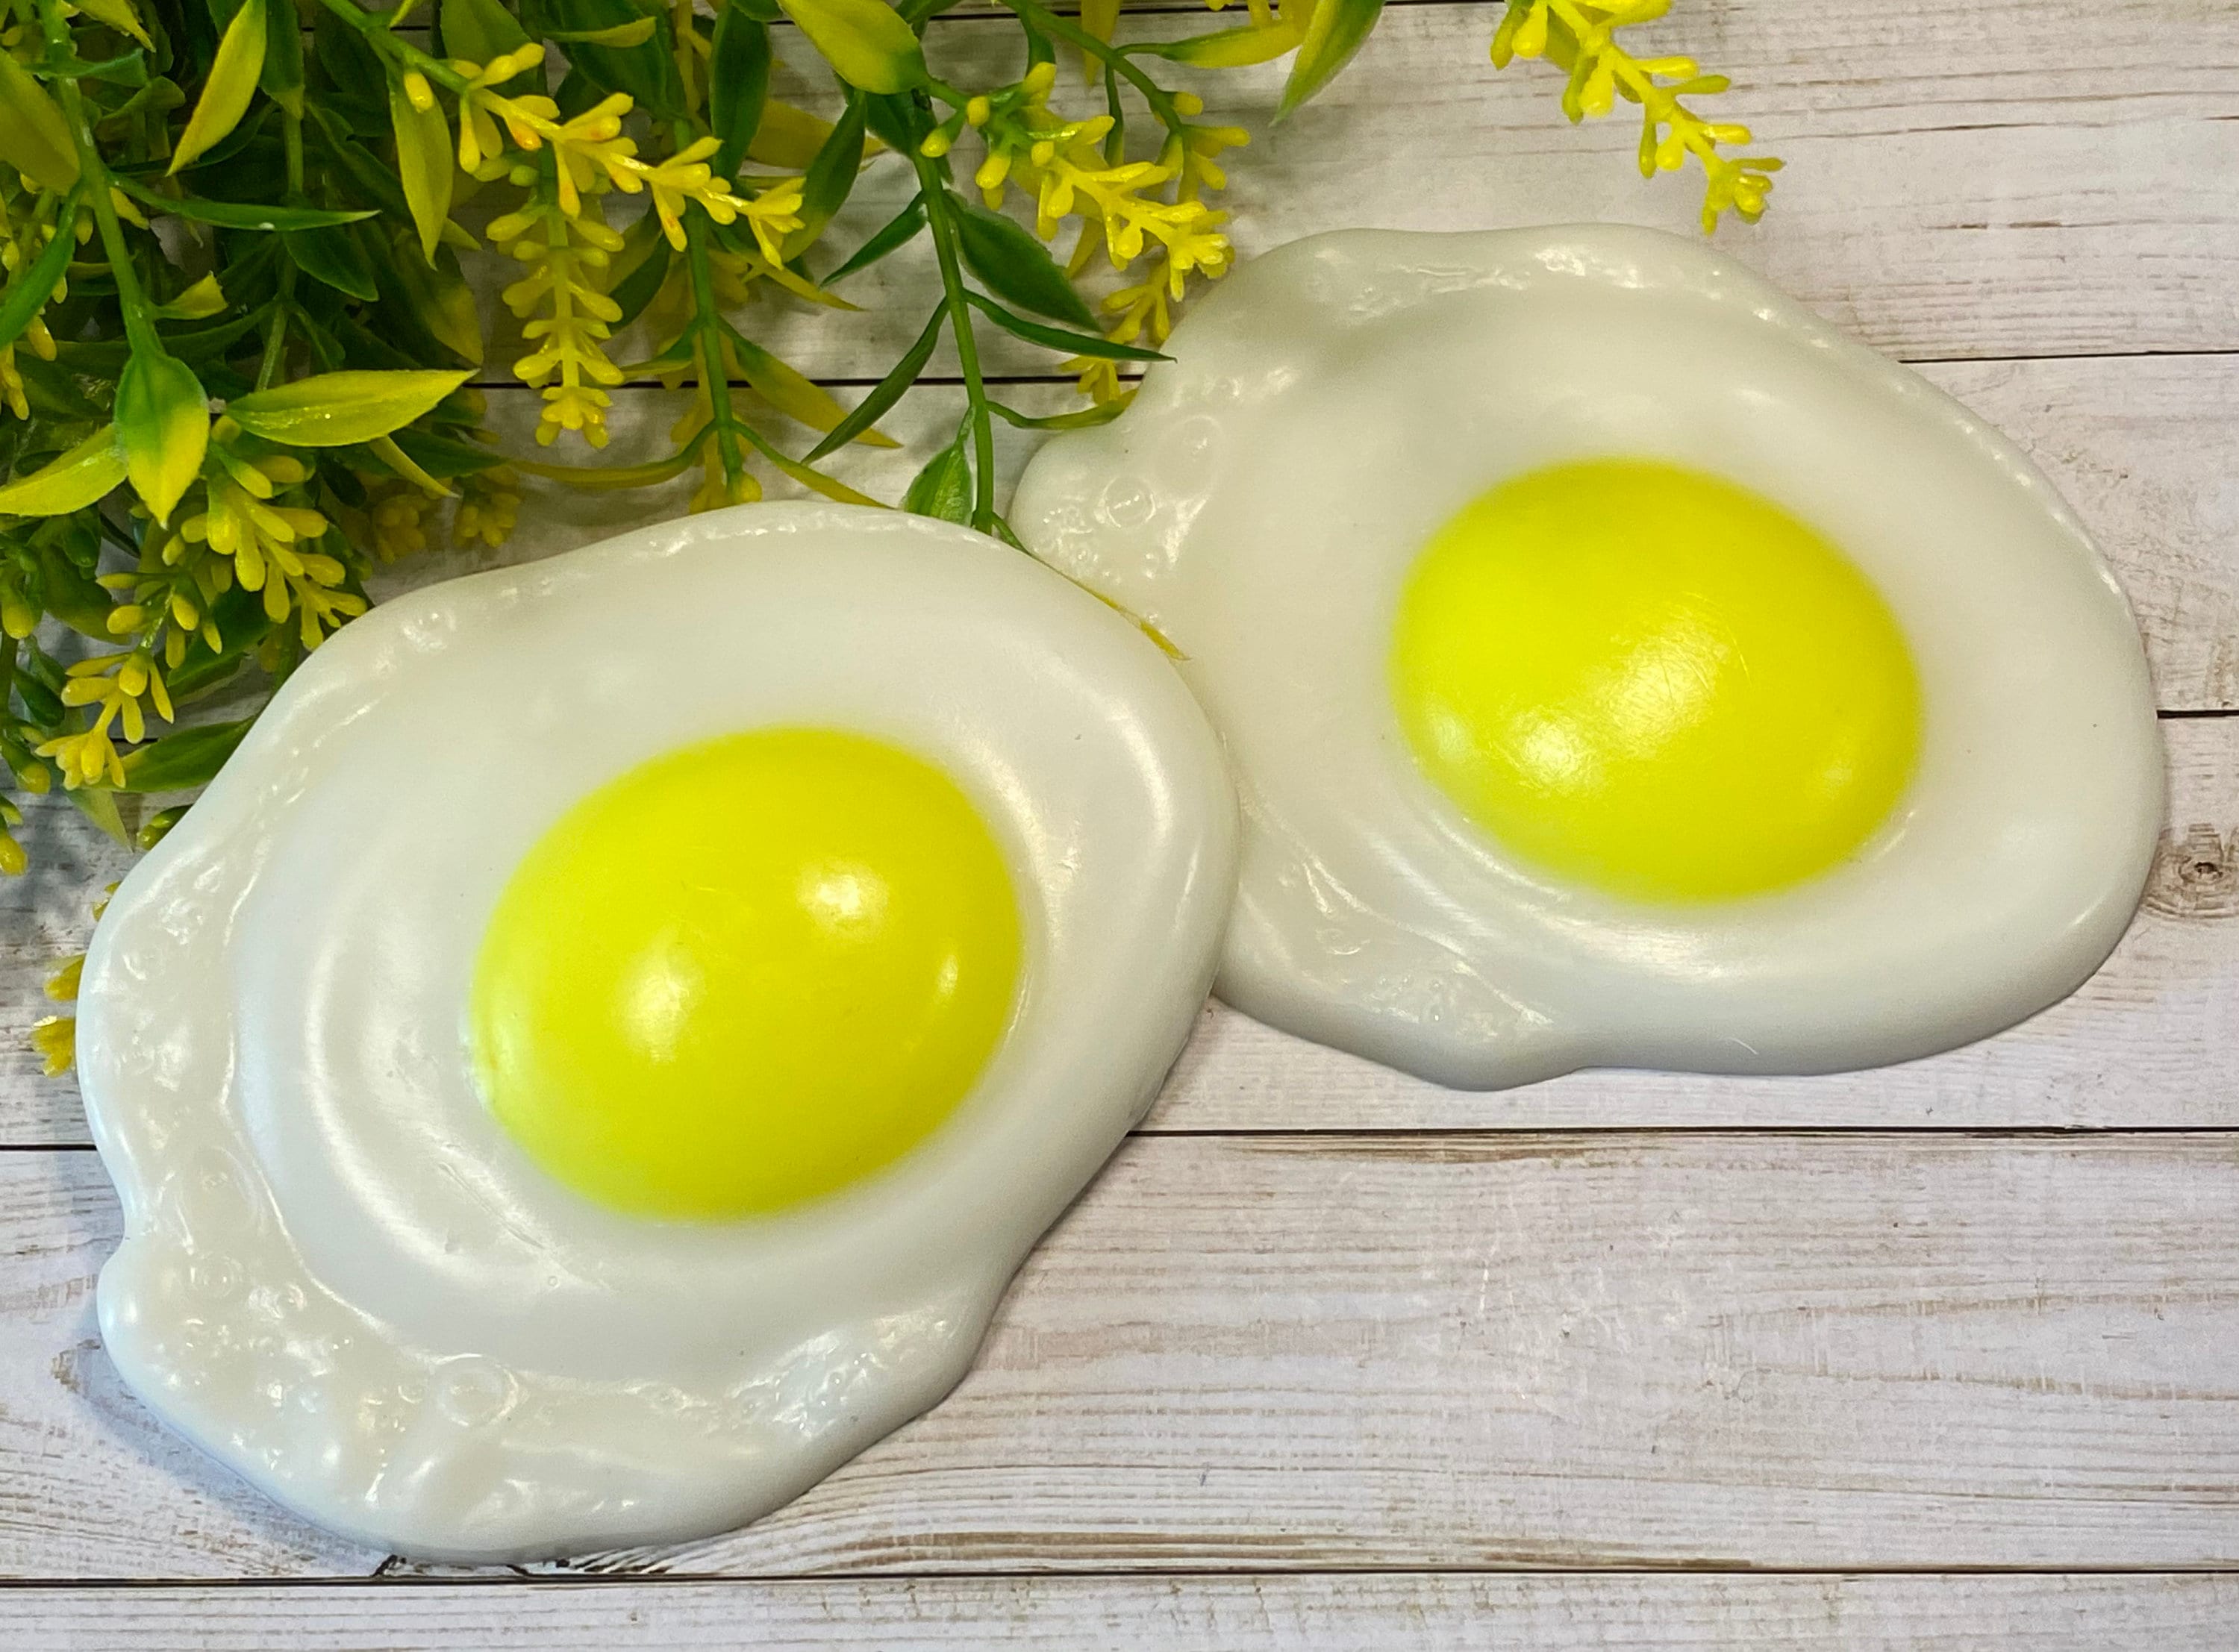 1pc Silicone Egg Ring, Egg Mold, Egg Ring Molds, Fried Egg Mold, DIY Fried  Egg Mold, Creative Egg Mold, Kawaii Egg Mold, Egg Ring Molds For Cooking, K